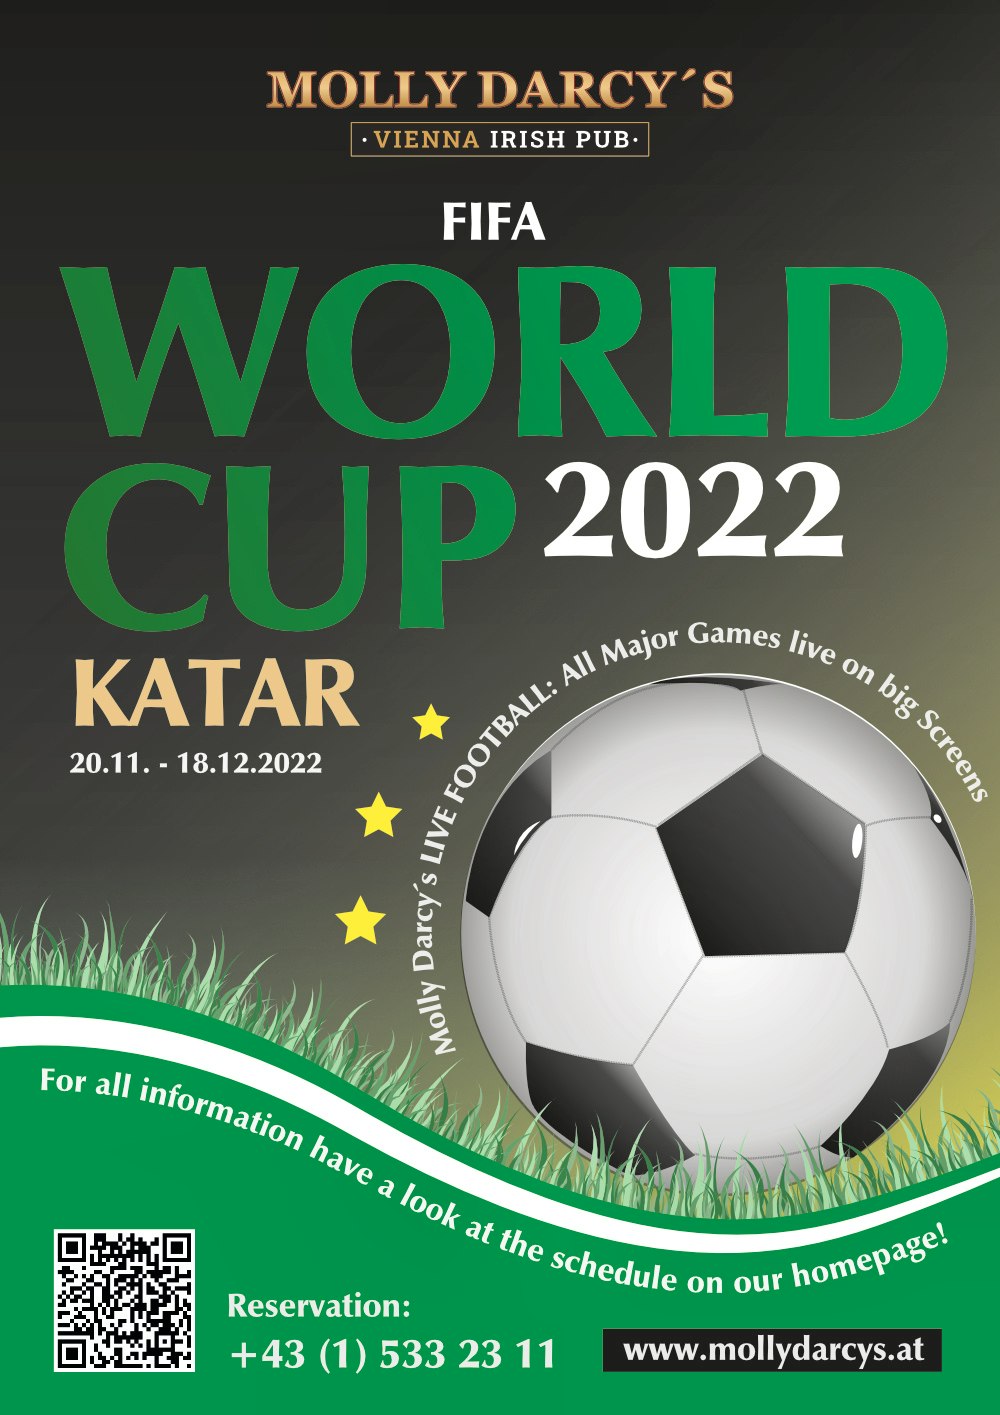 Molly Darcys broadcasting World Cup 2022 Katar